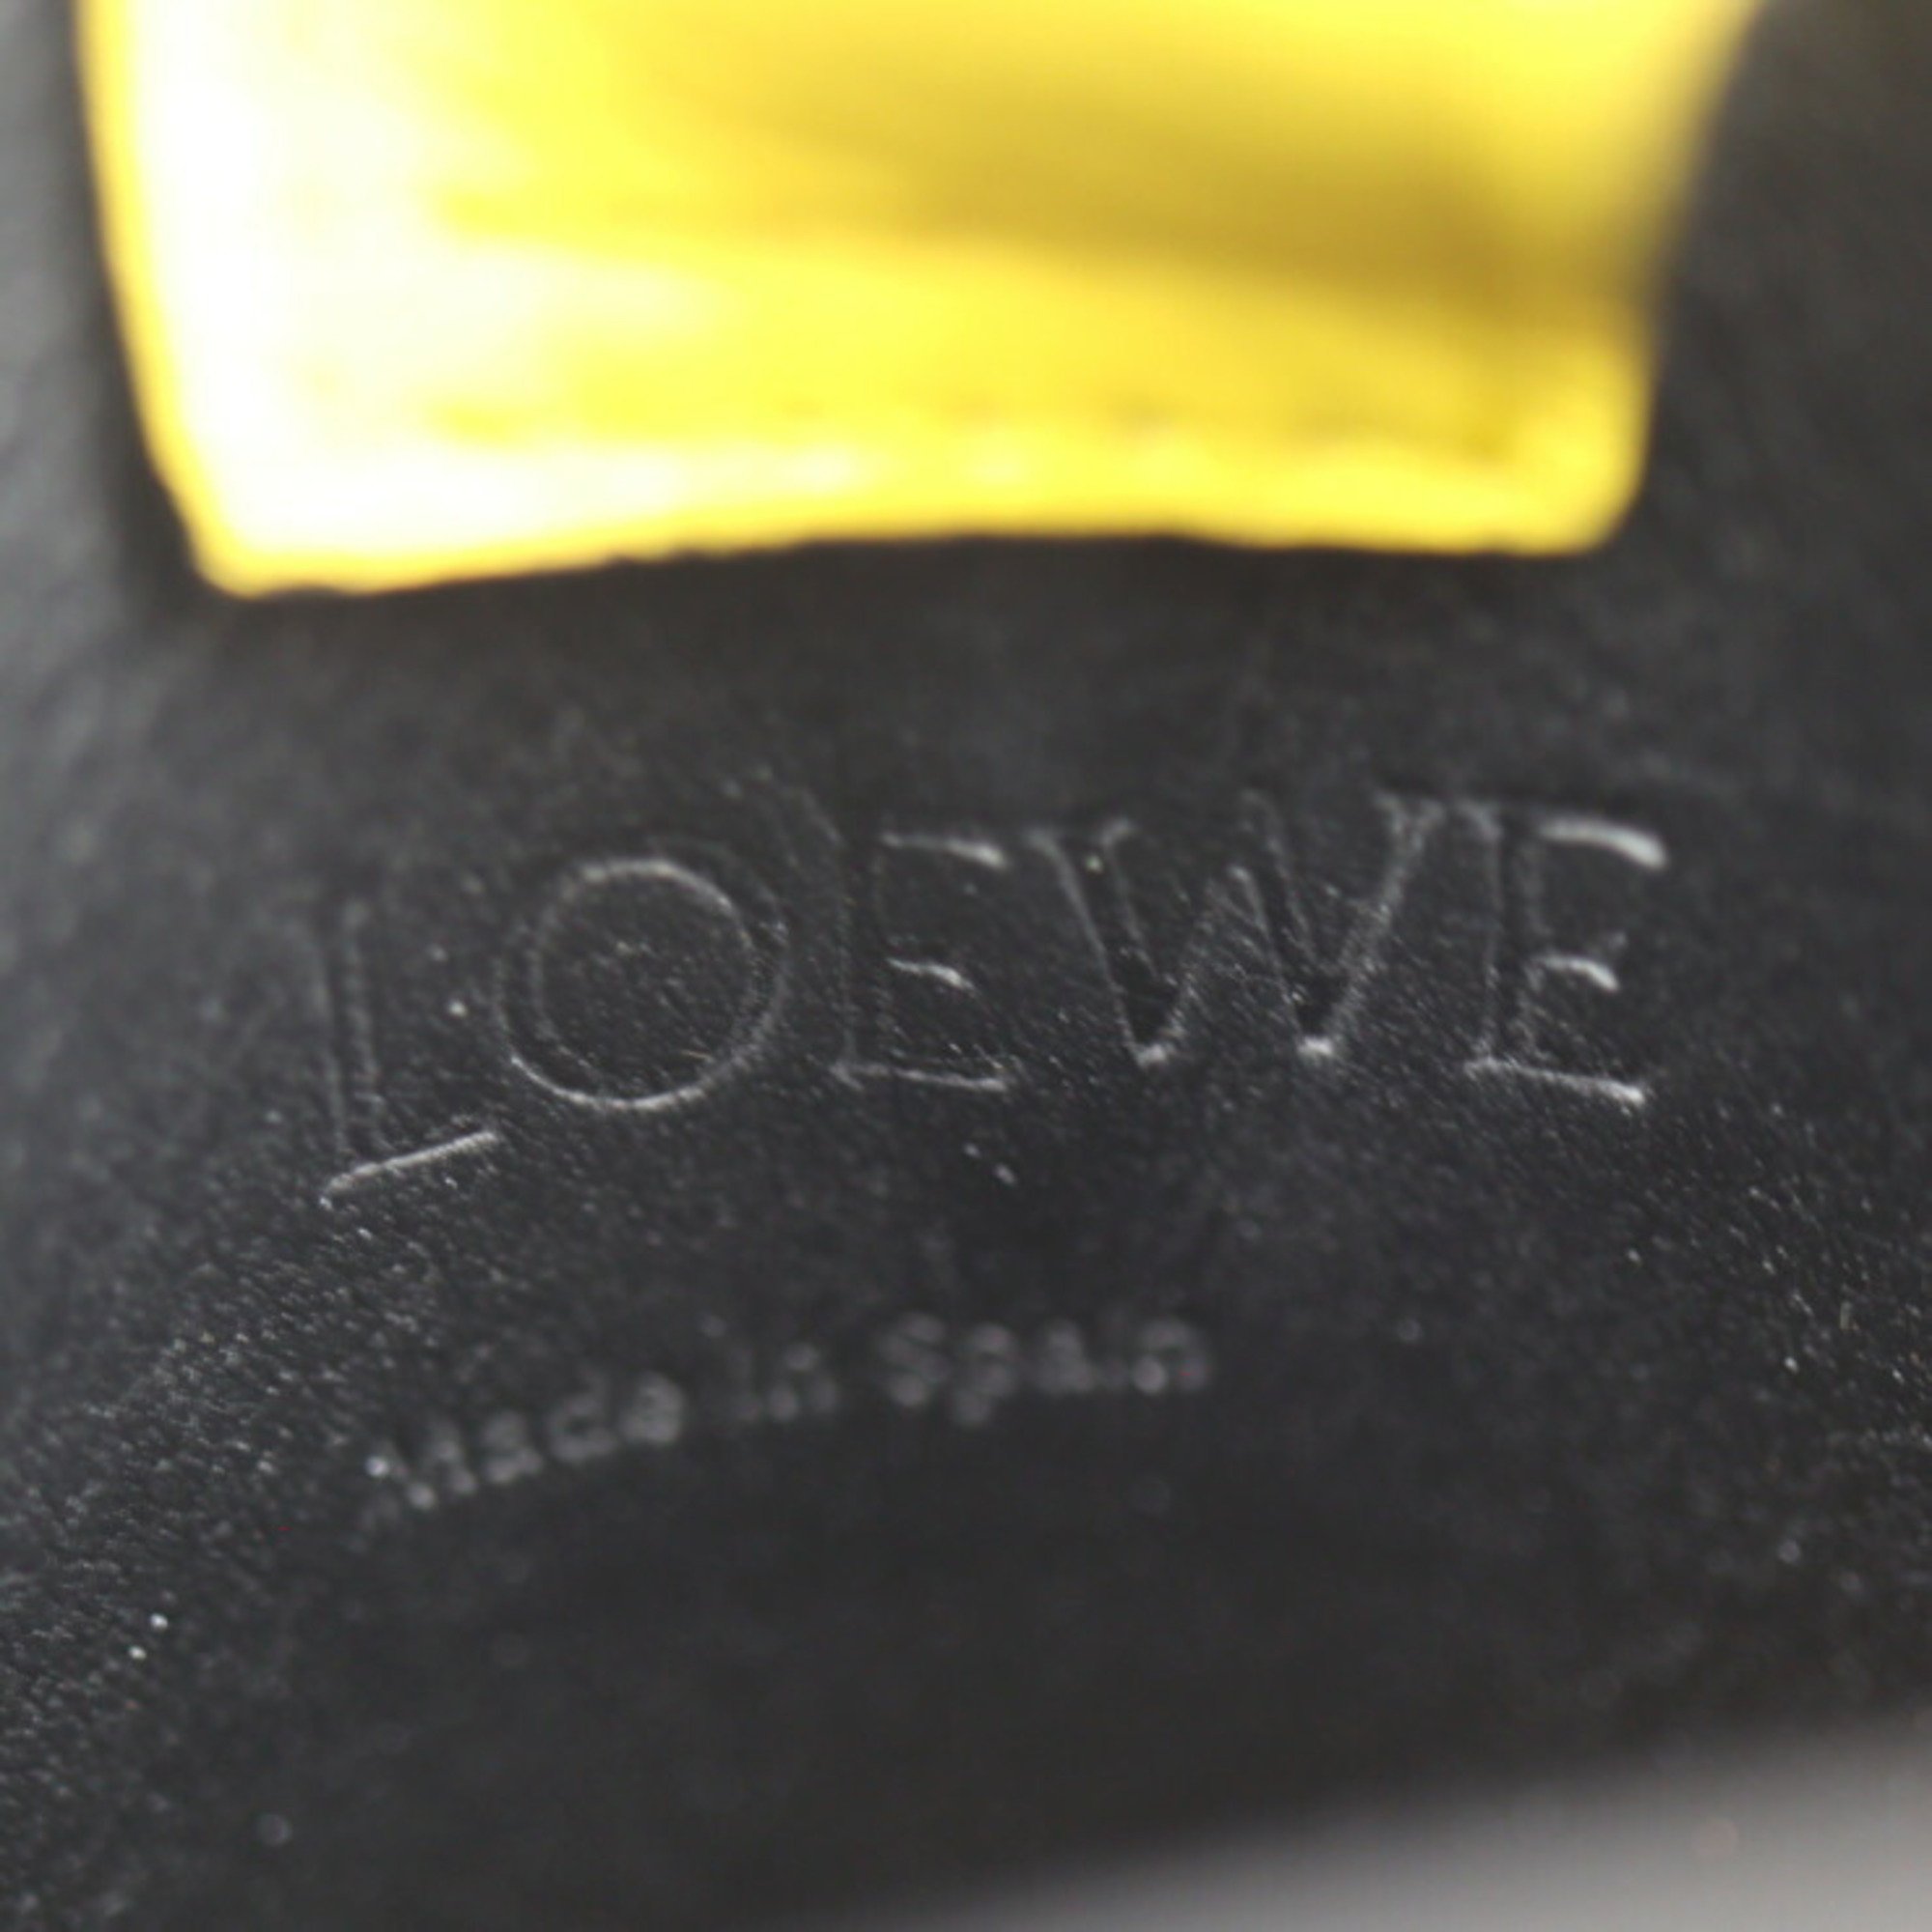 LOEWE Elephant Pocket Shoulder Bag Leather Yellow Pouch Pochette